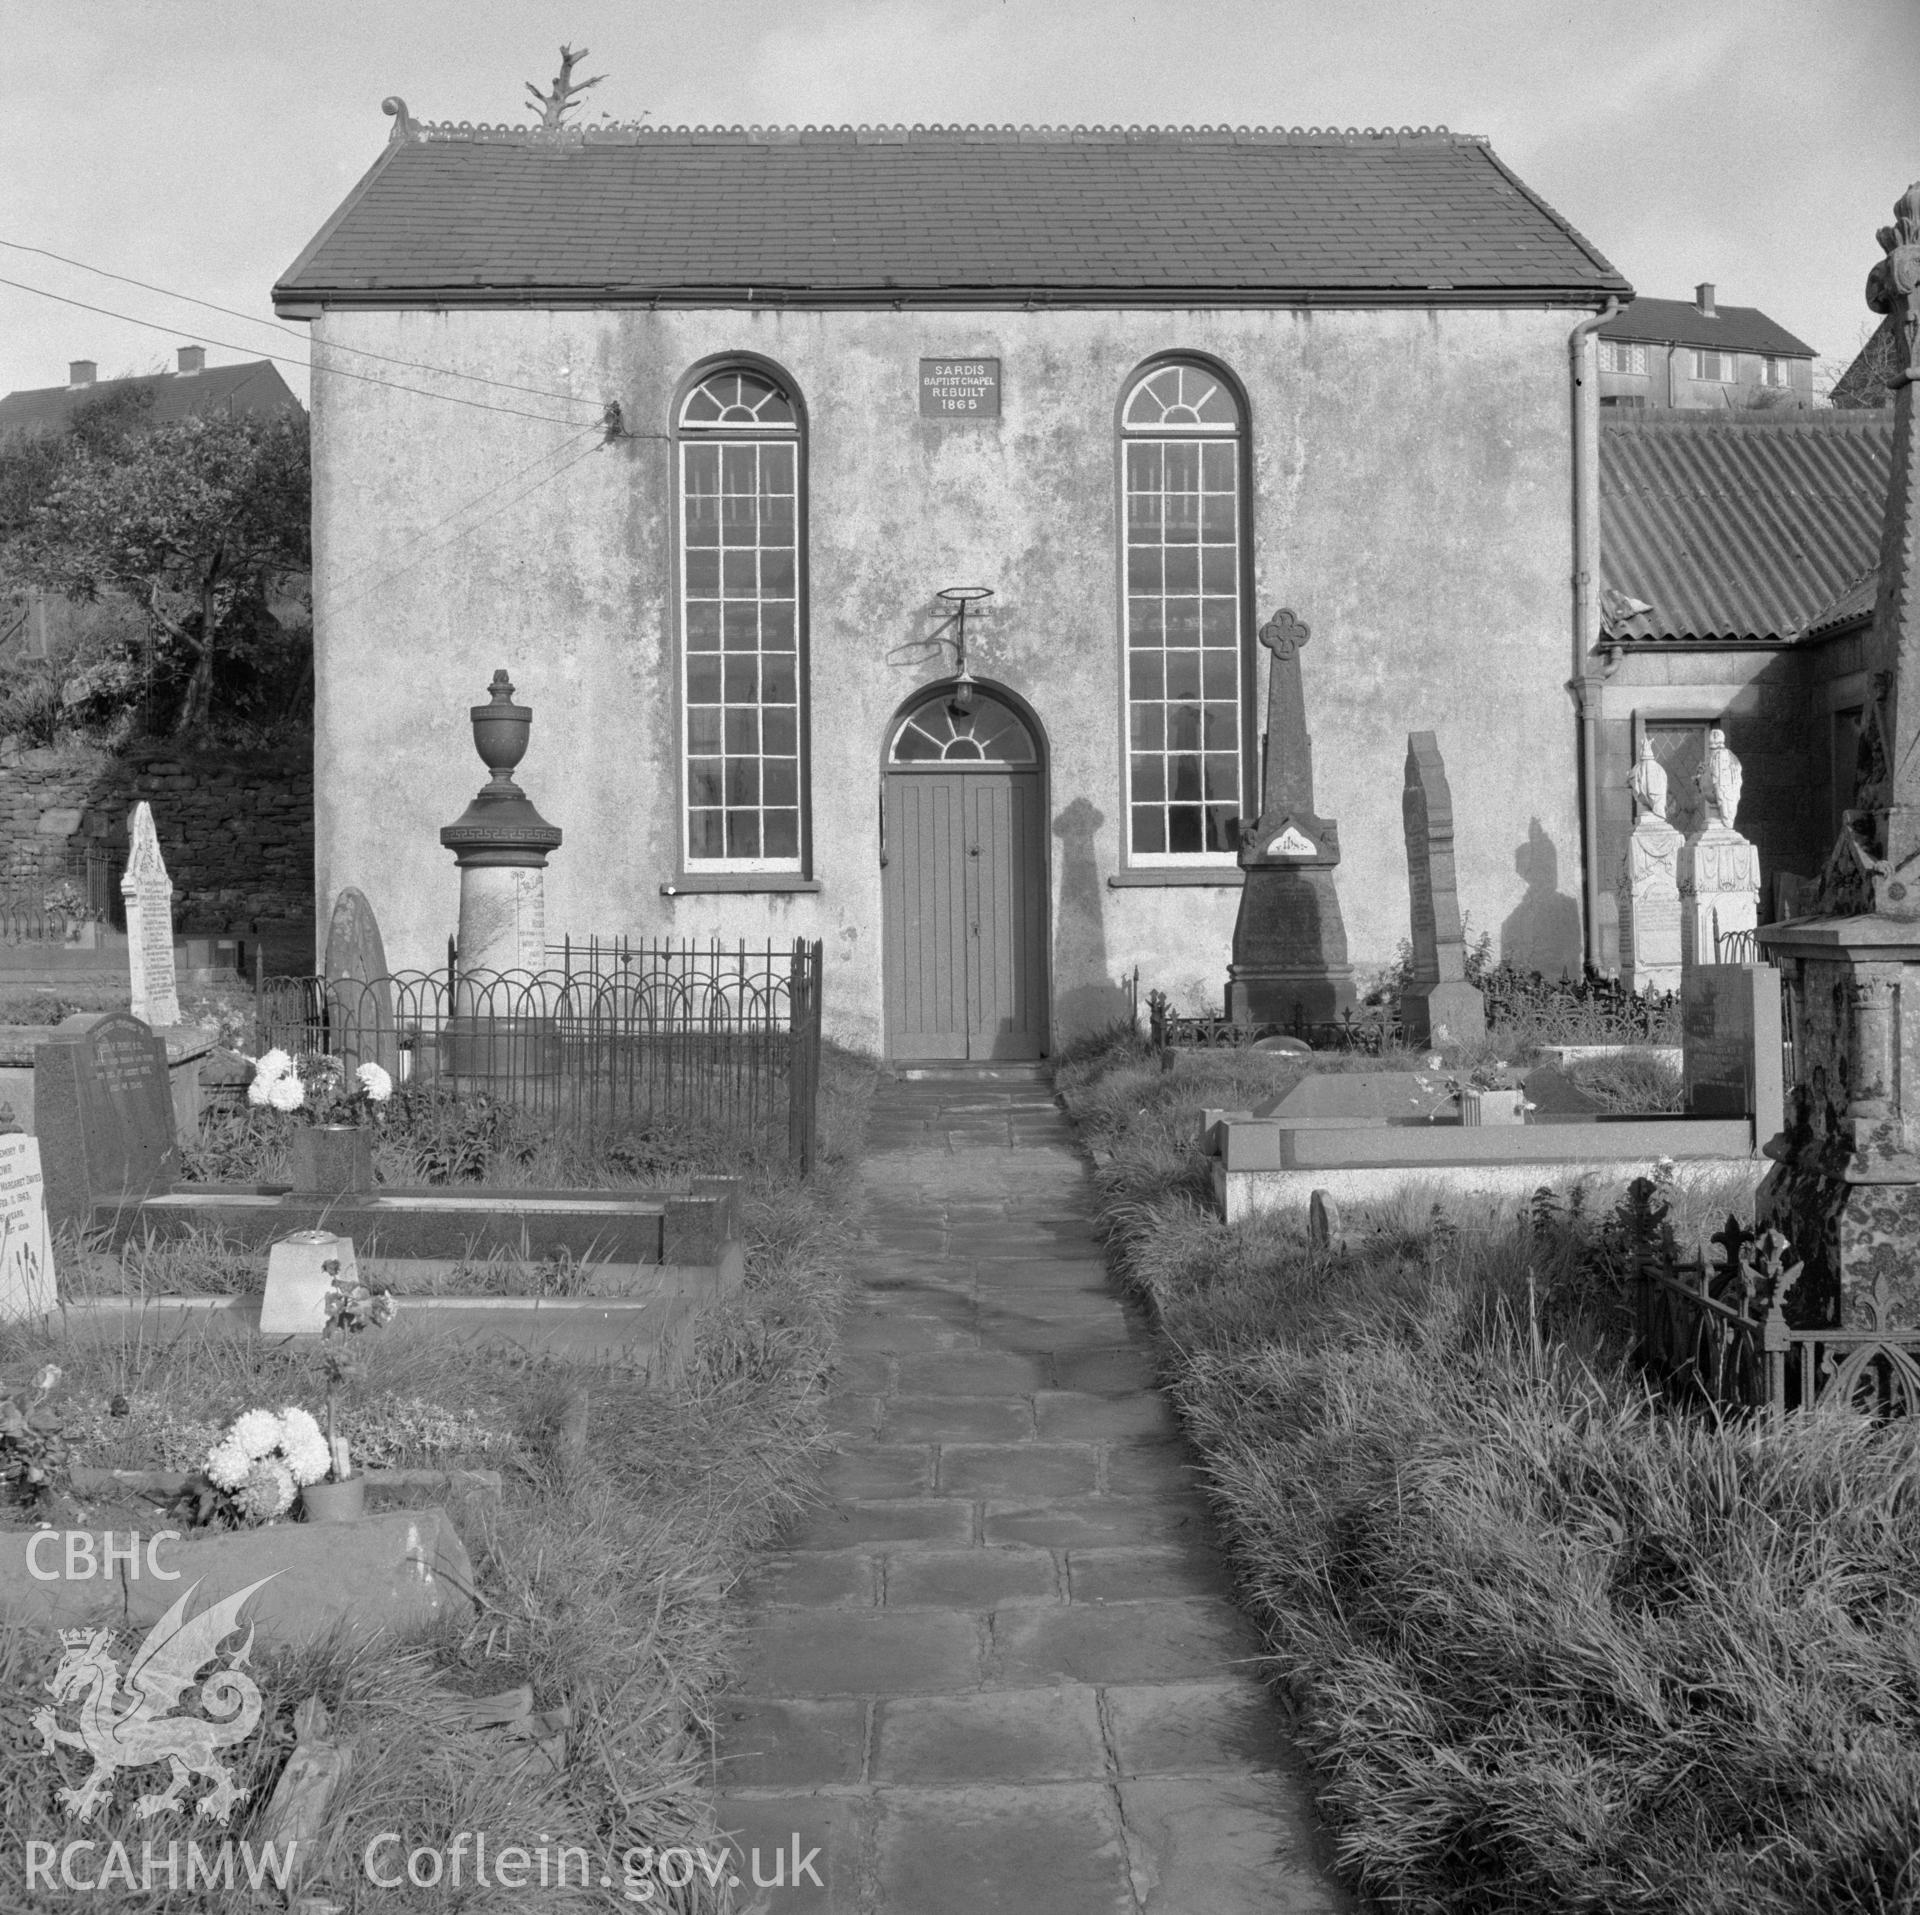 Digital copy of a black and white negative showing Baptist Chapel, Bettws, taken 26th November 1965.